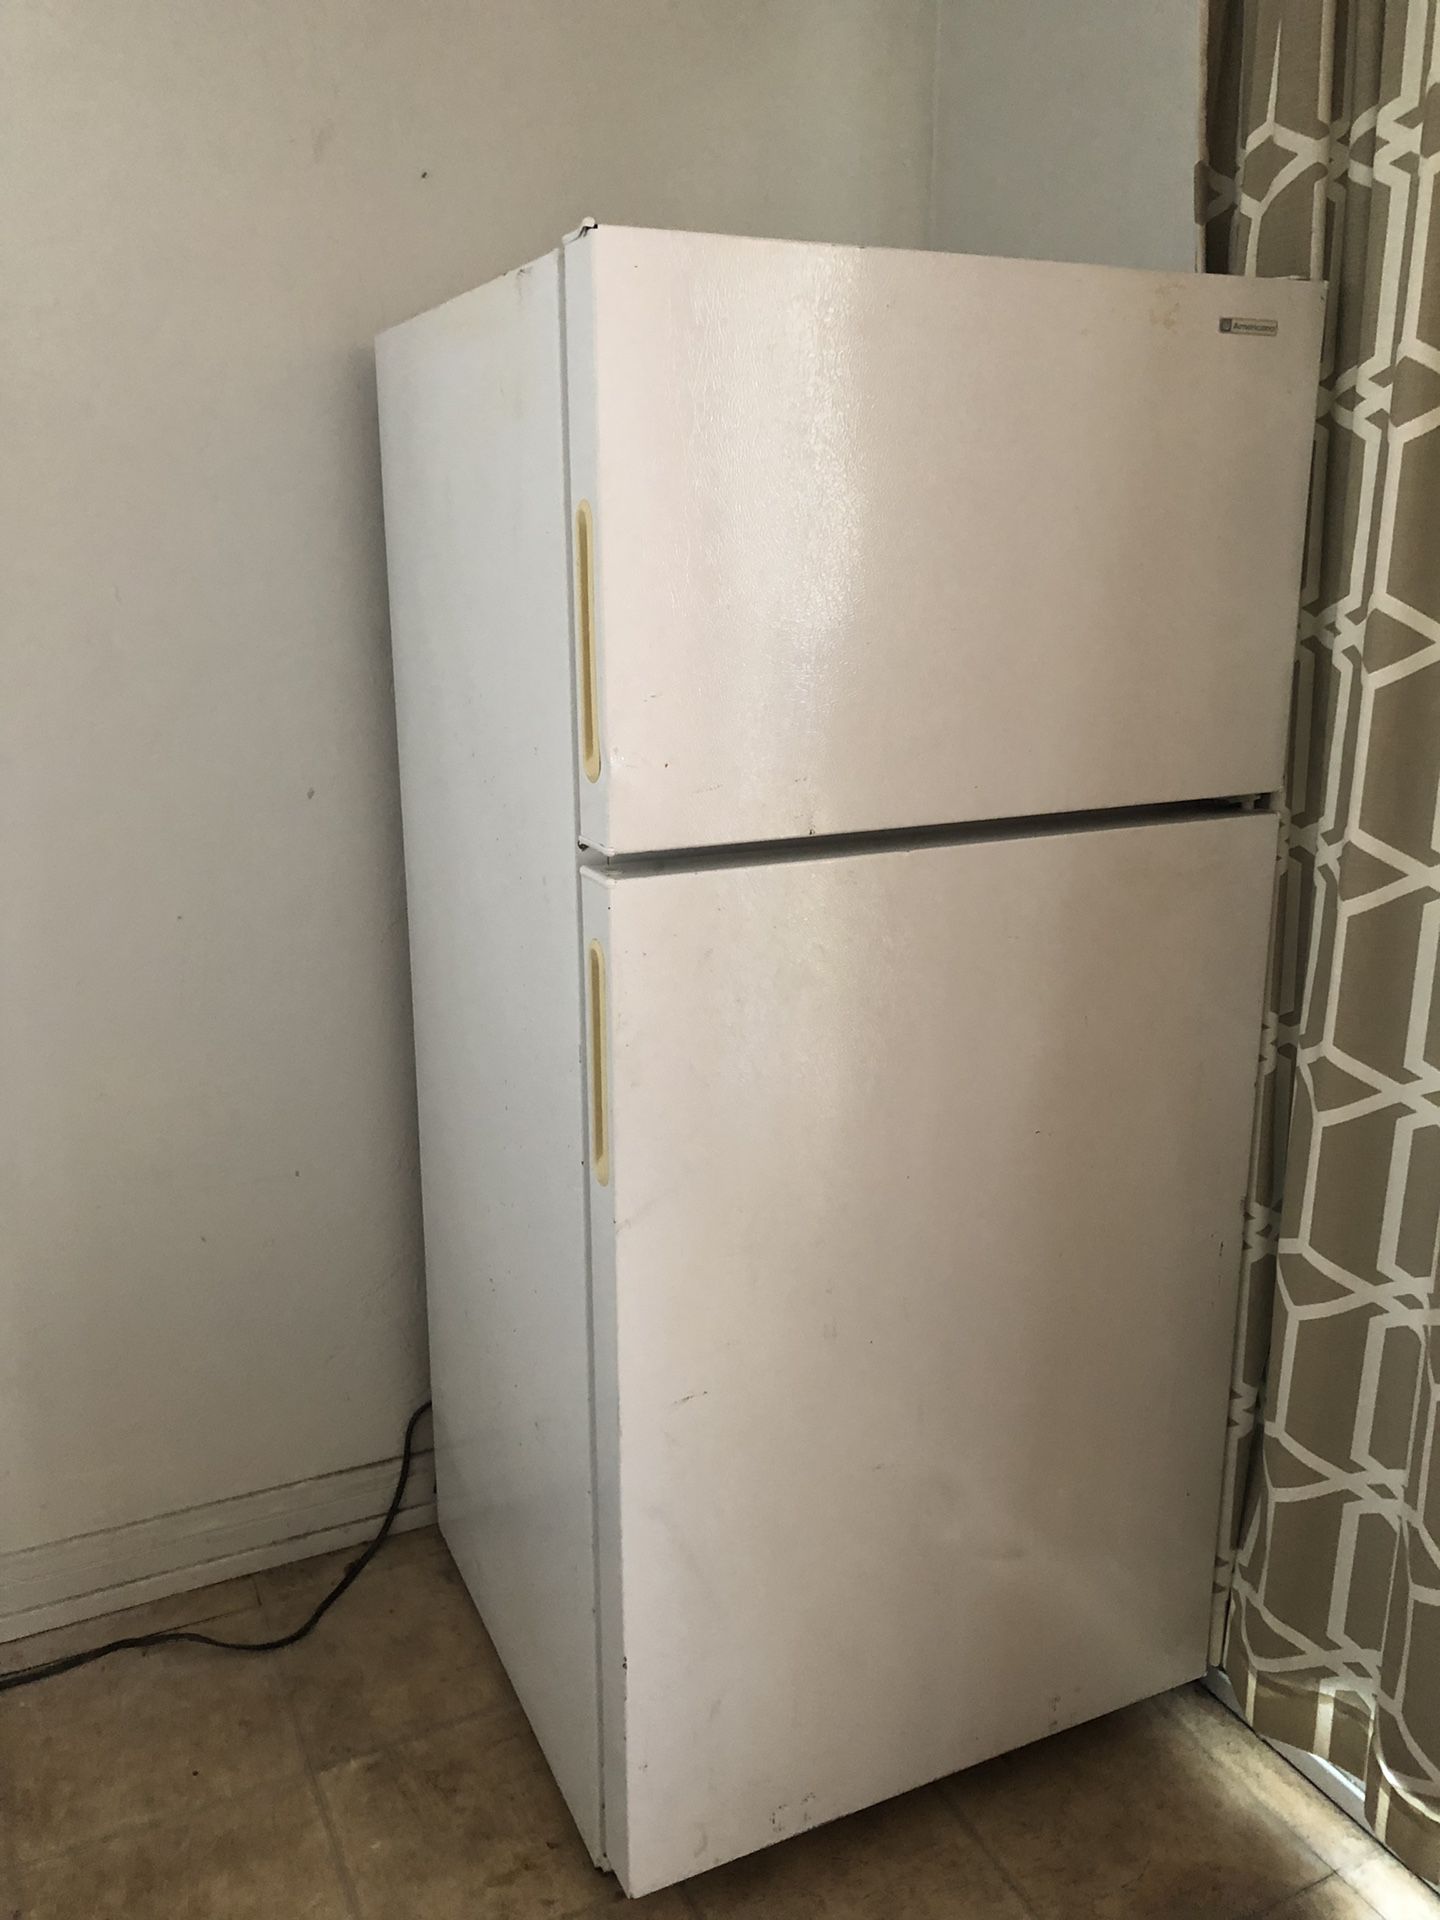 Americana Refrigerator